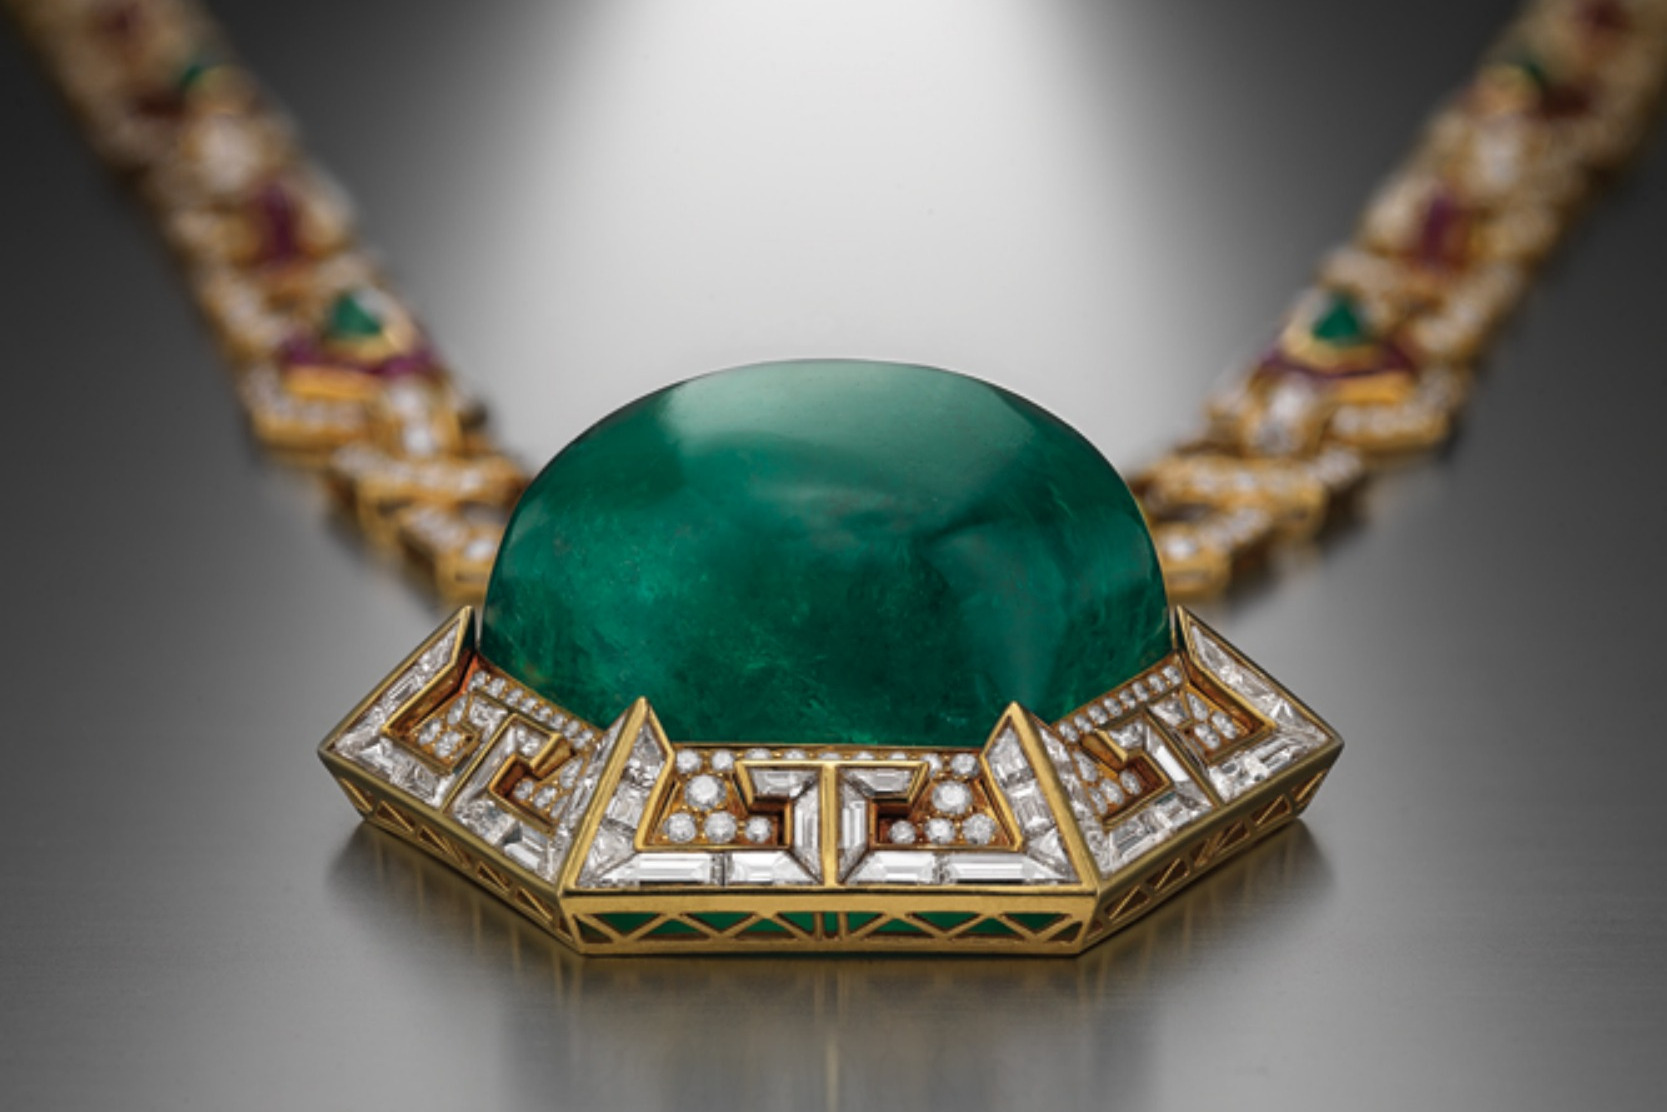 bvlgari jewelry milan